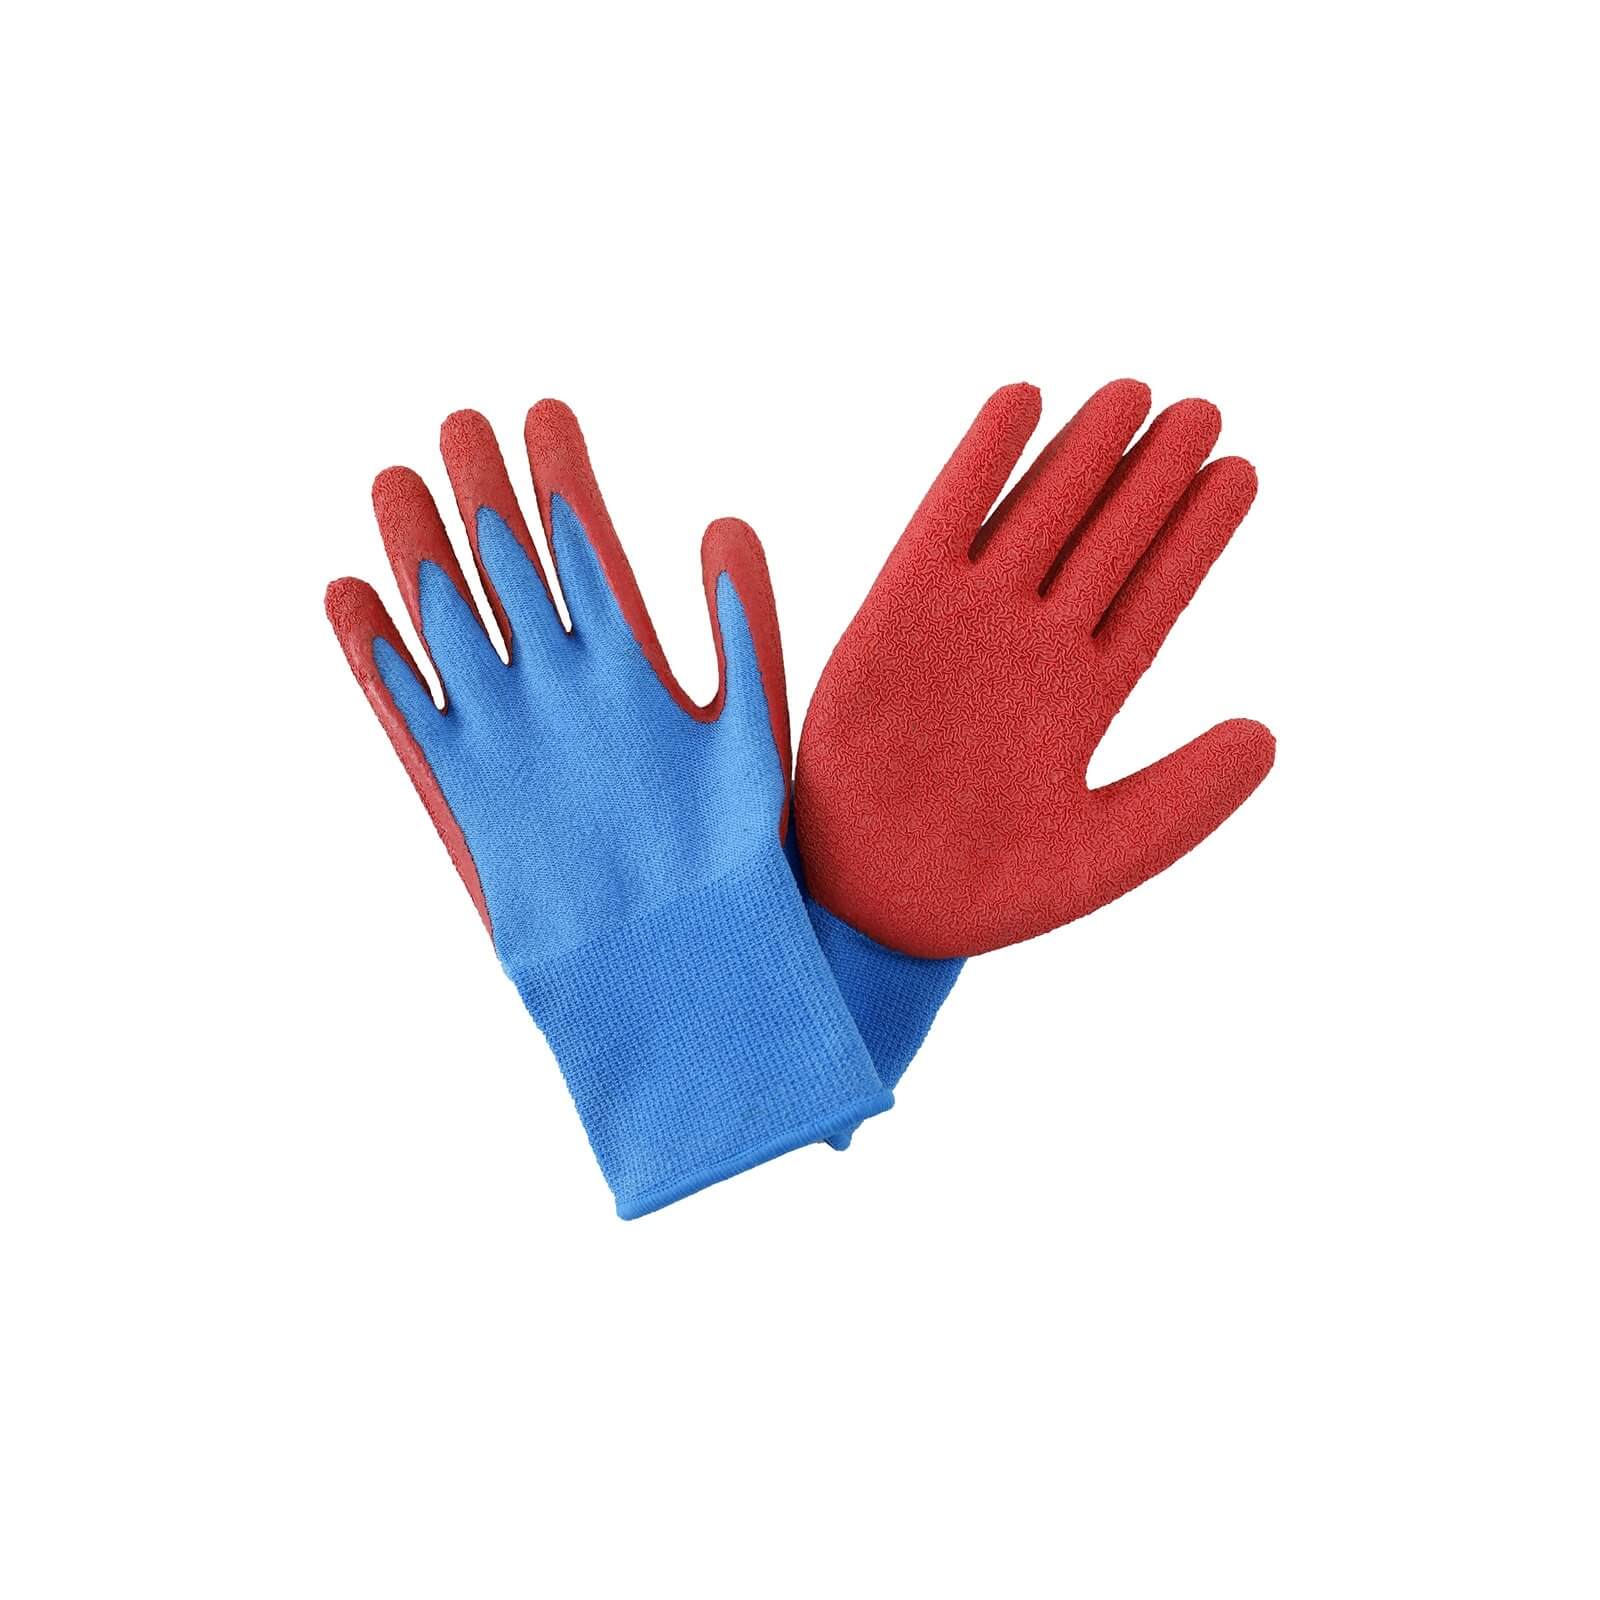 Budding Gardener Gloves - Blue and Red Kids